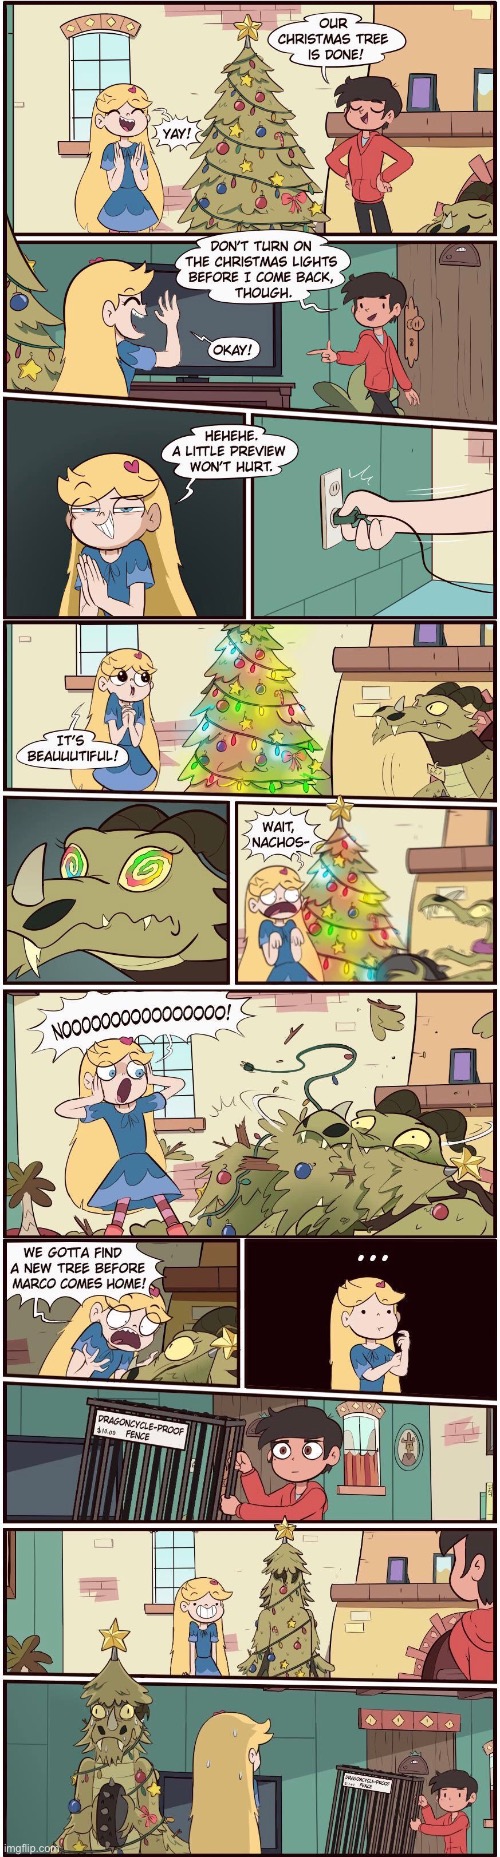 MorningMark - Oh, Christmas Treecycle | image tagged in morningmark,comics,christmas,svtfoe,star vs the forces of evil,memes | made w/ Imgflip meme maker